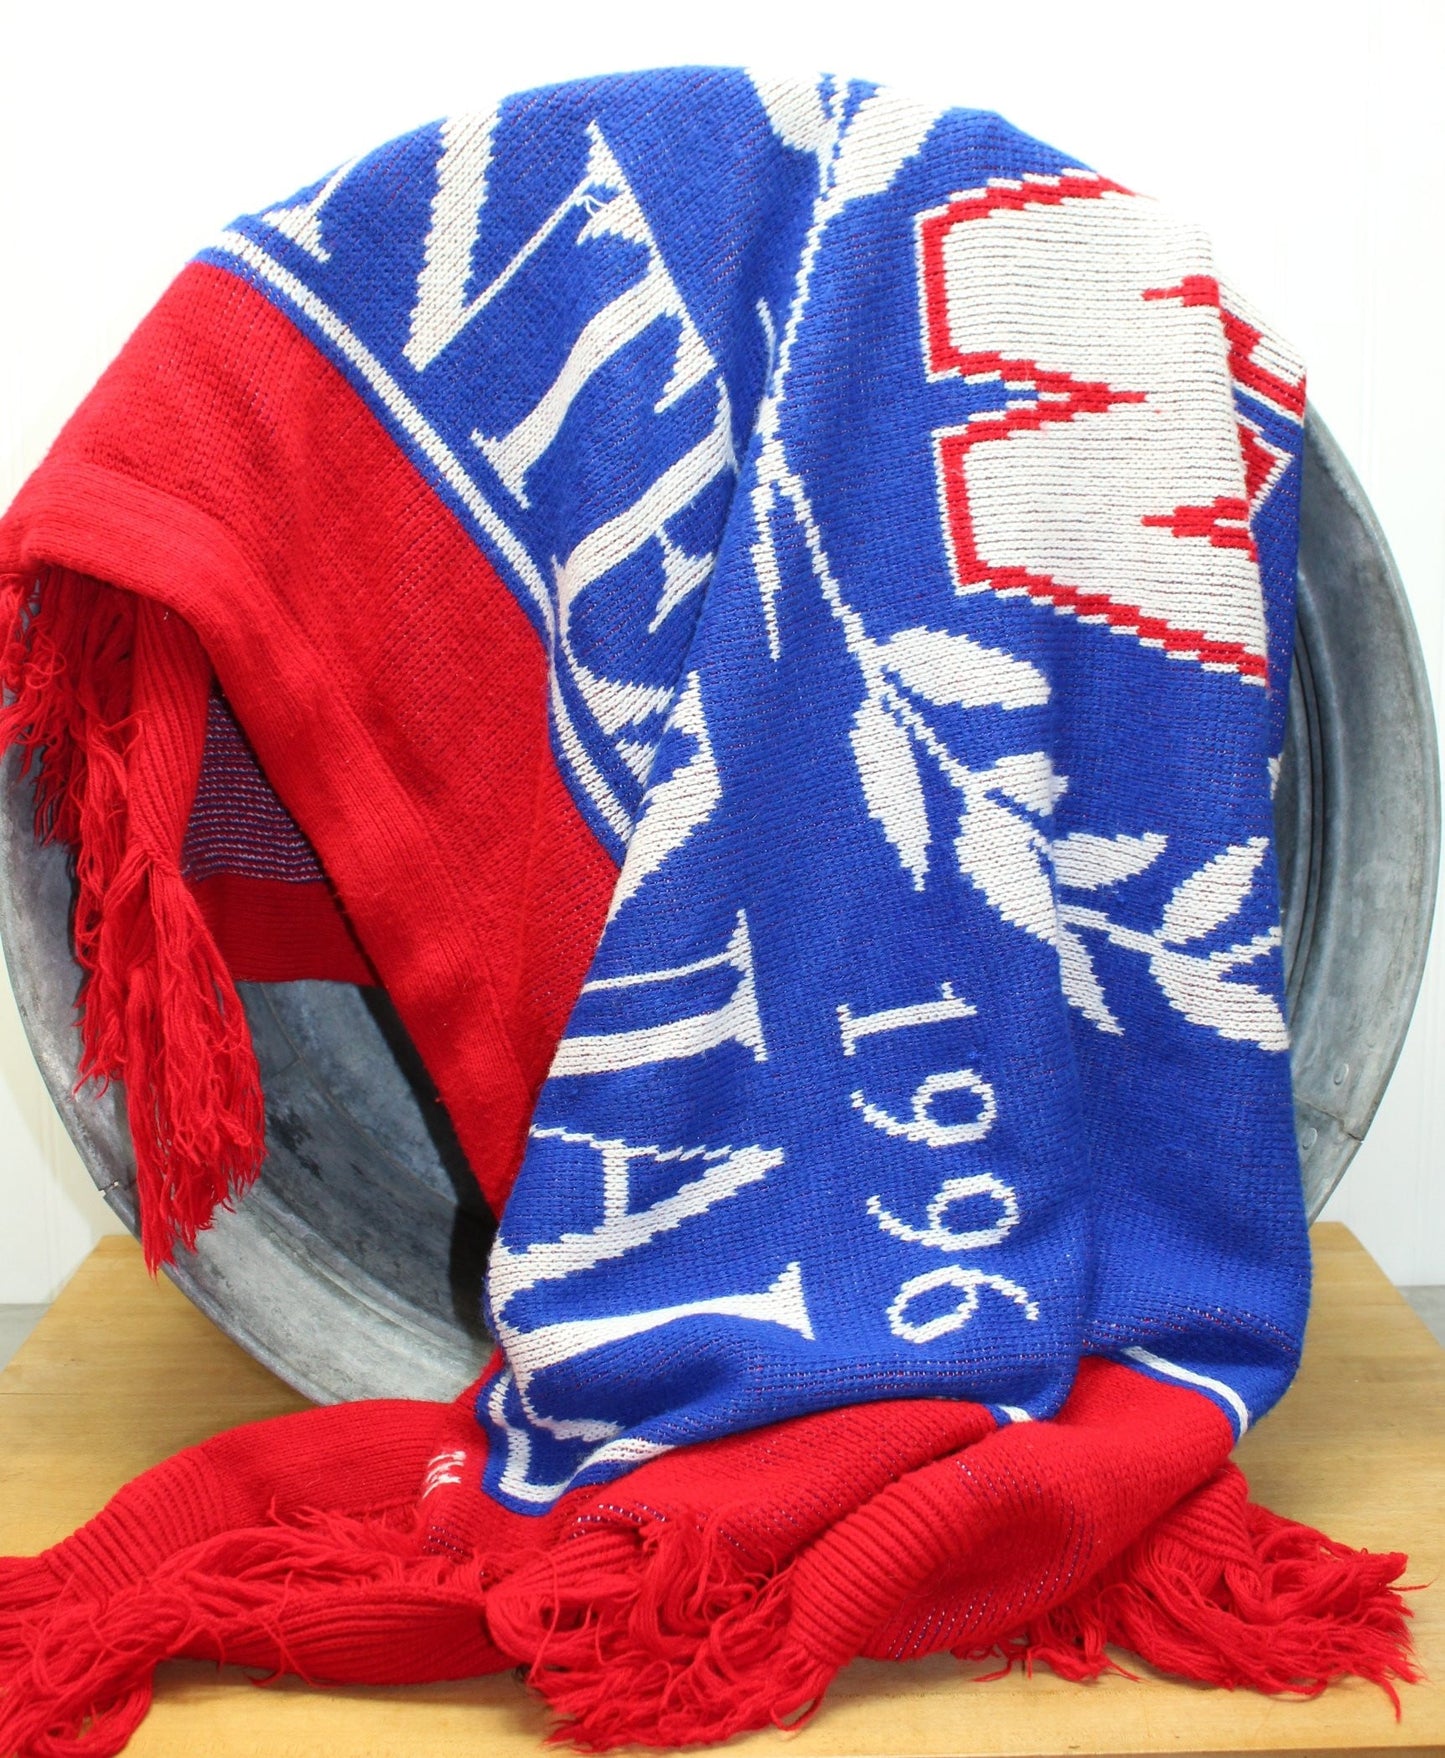 Big Ten Centennial Collectible Throw Blanket -  1896 -- 1996 - Wisconsin rare older blanket